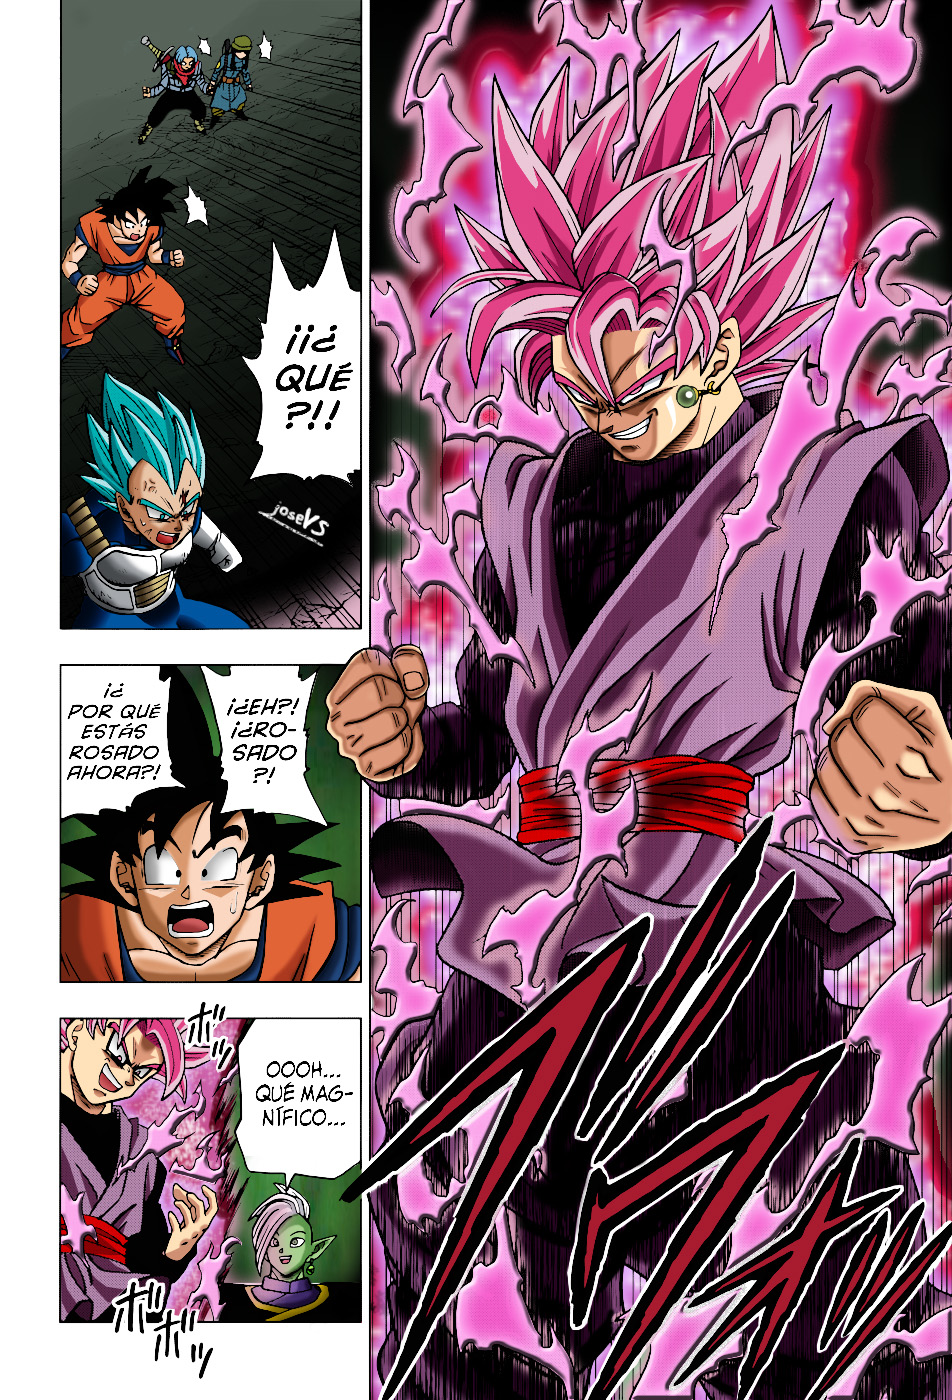 Goku Black SSJ rose DBS manga 20 by MoniG02 by MoniG02 on DeviantArt